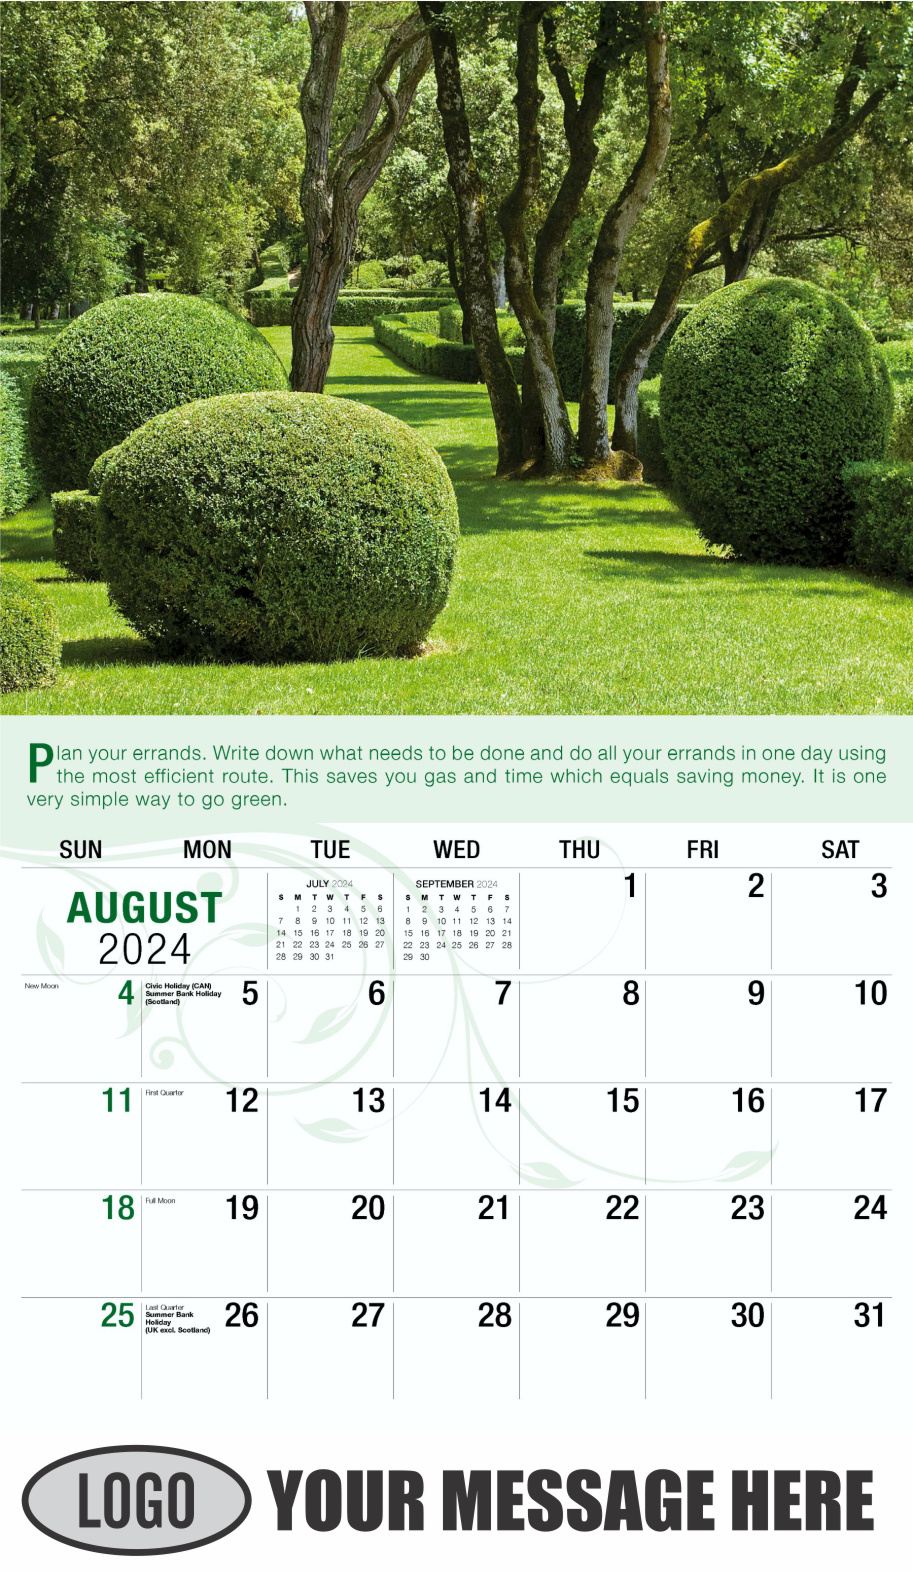 Go Green 2024 Business Promotion Calendar - August